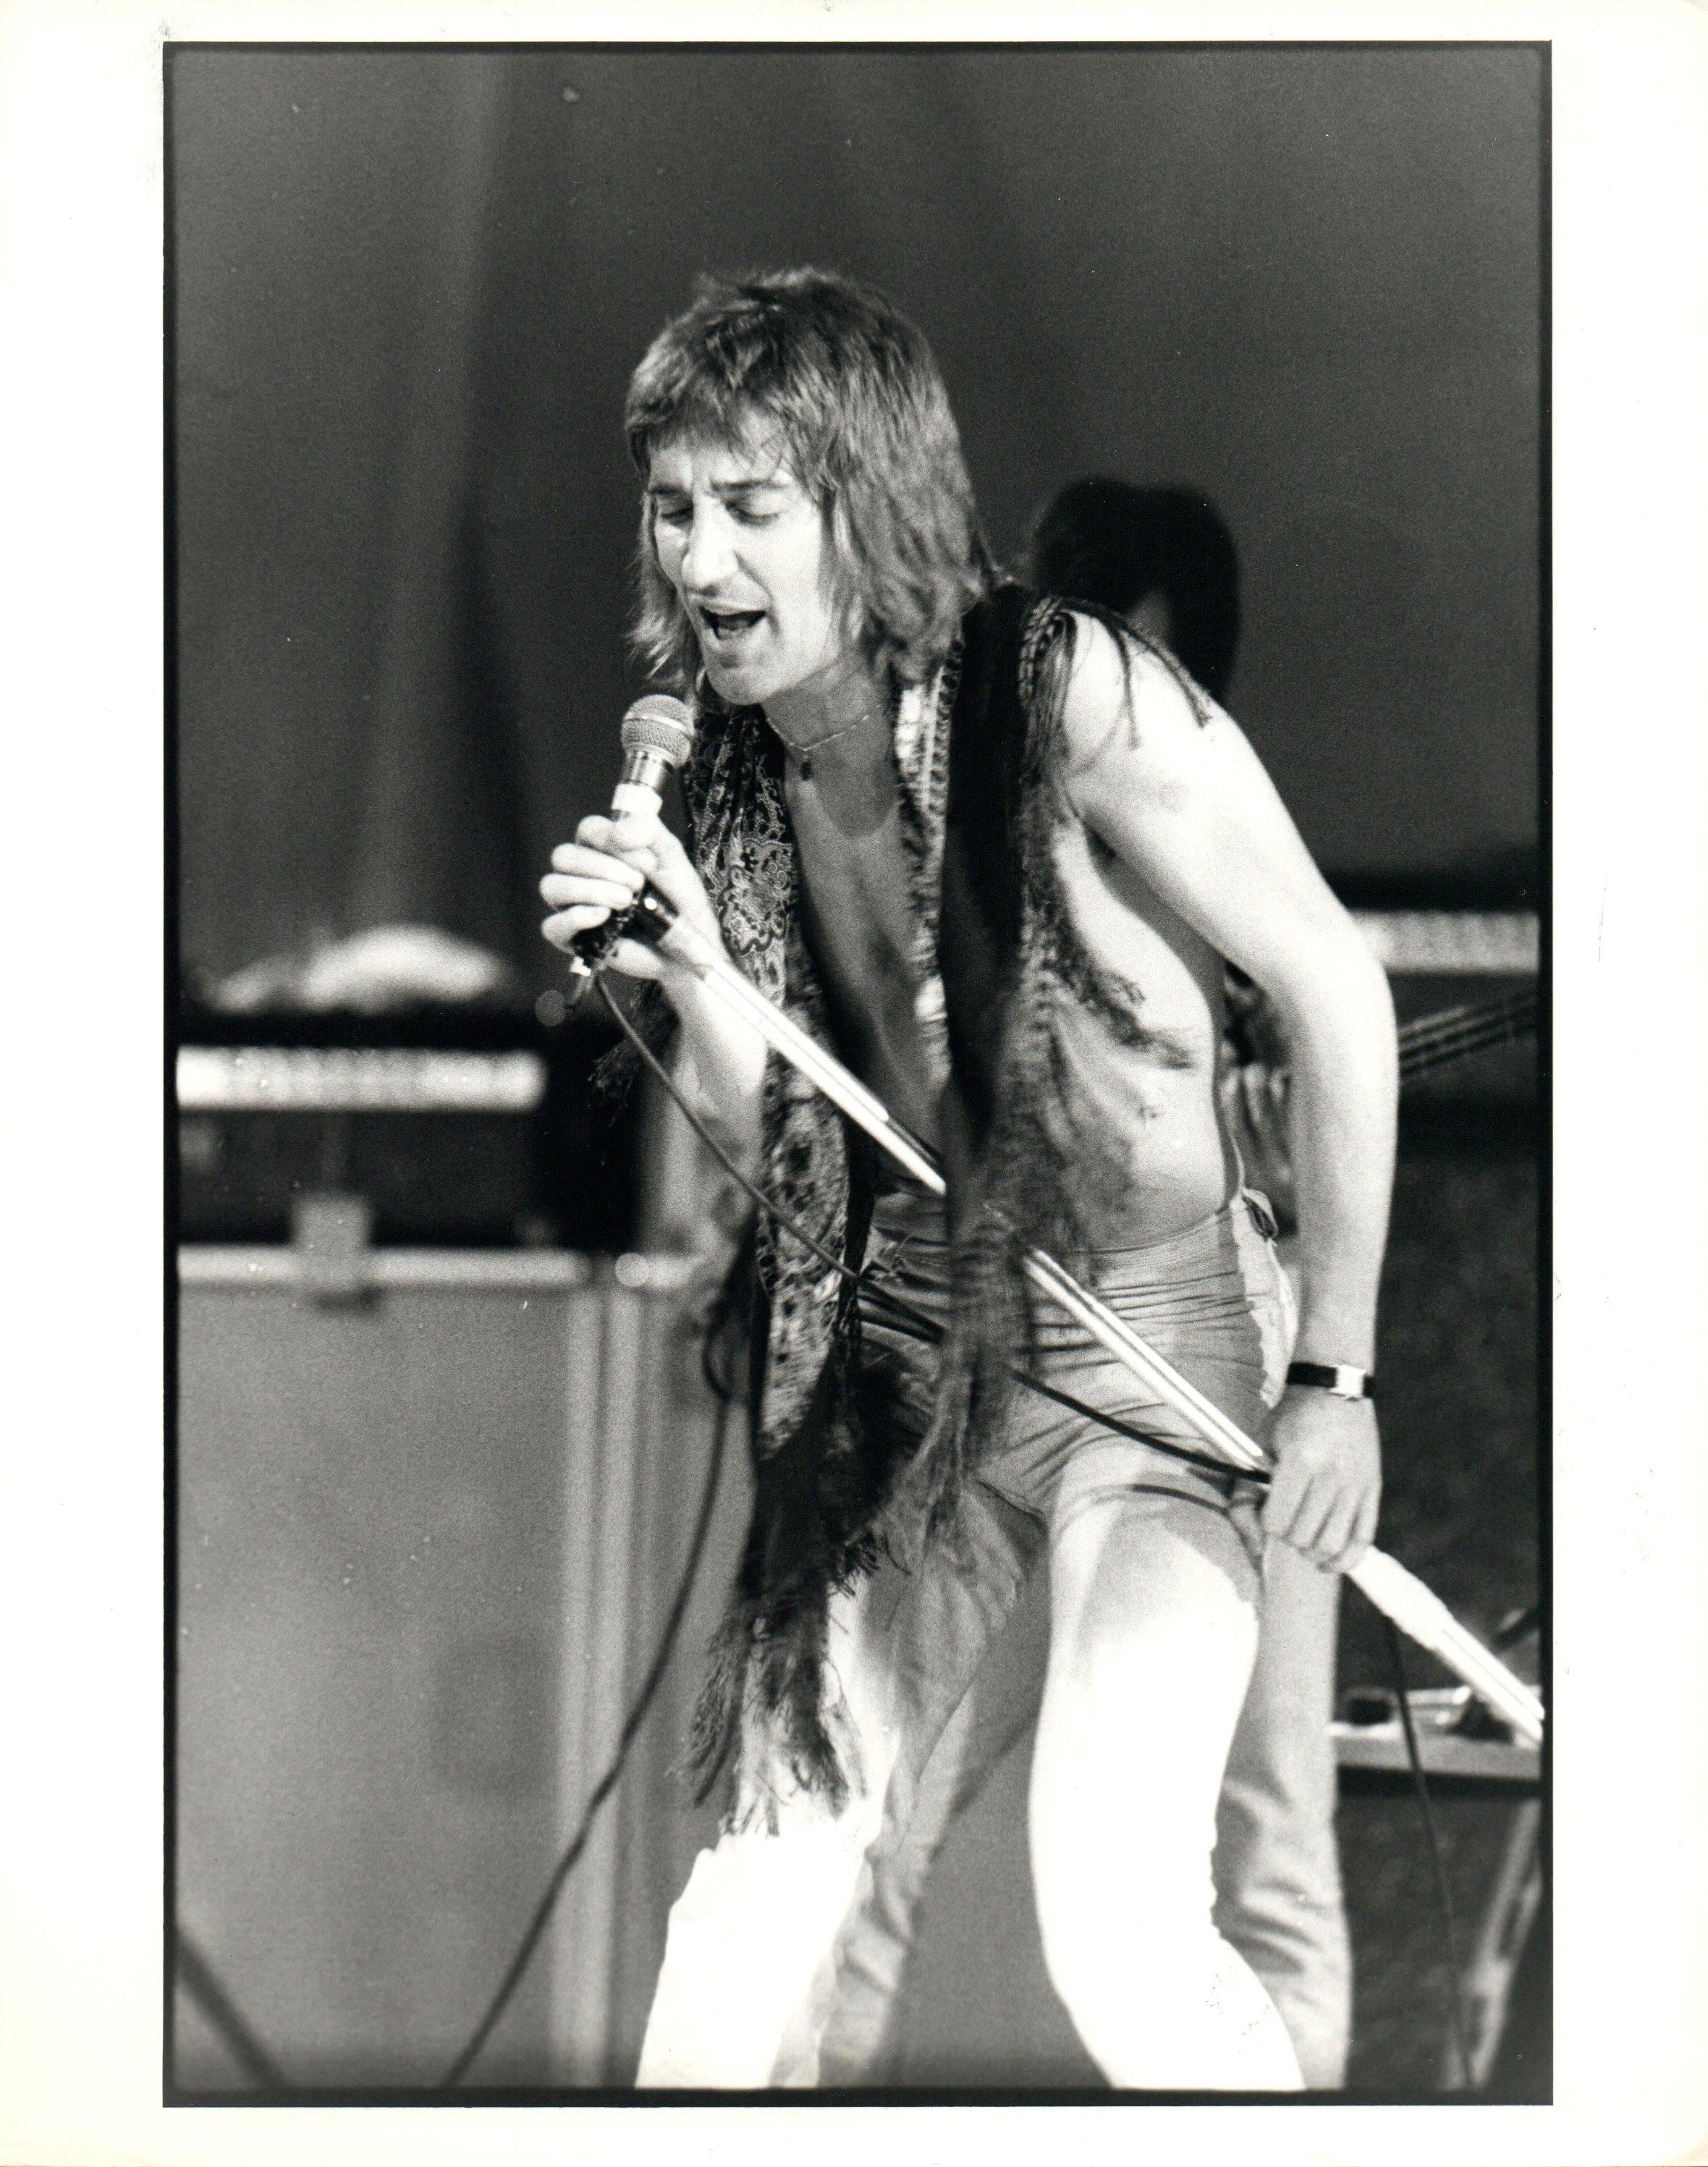 Paul Canty Portrait Photograph - Rod Stewart Singing on Stage Vintage Original Photograph